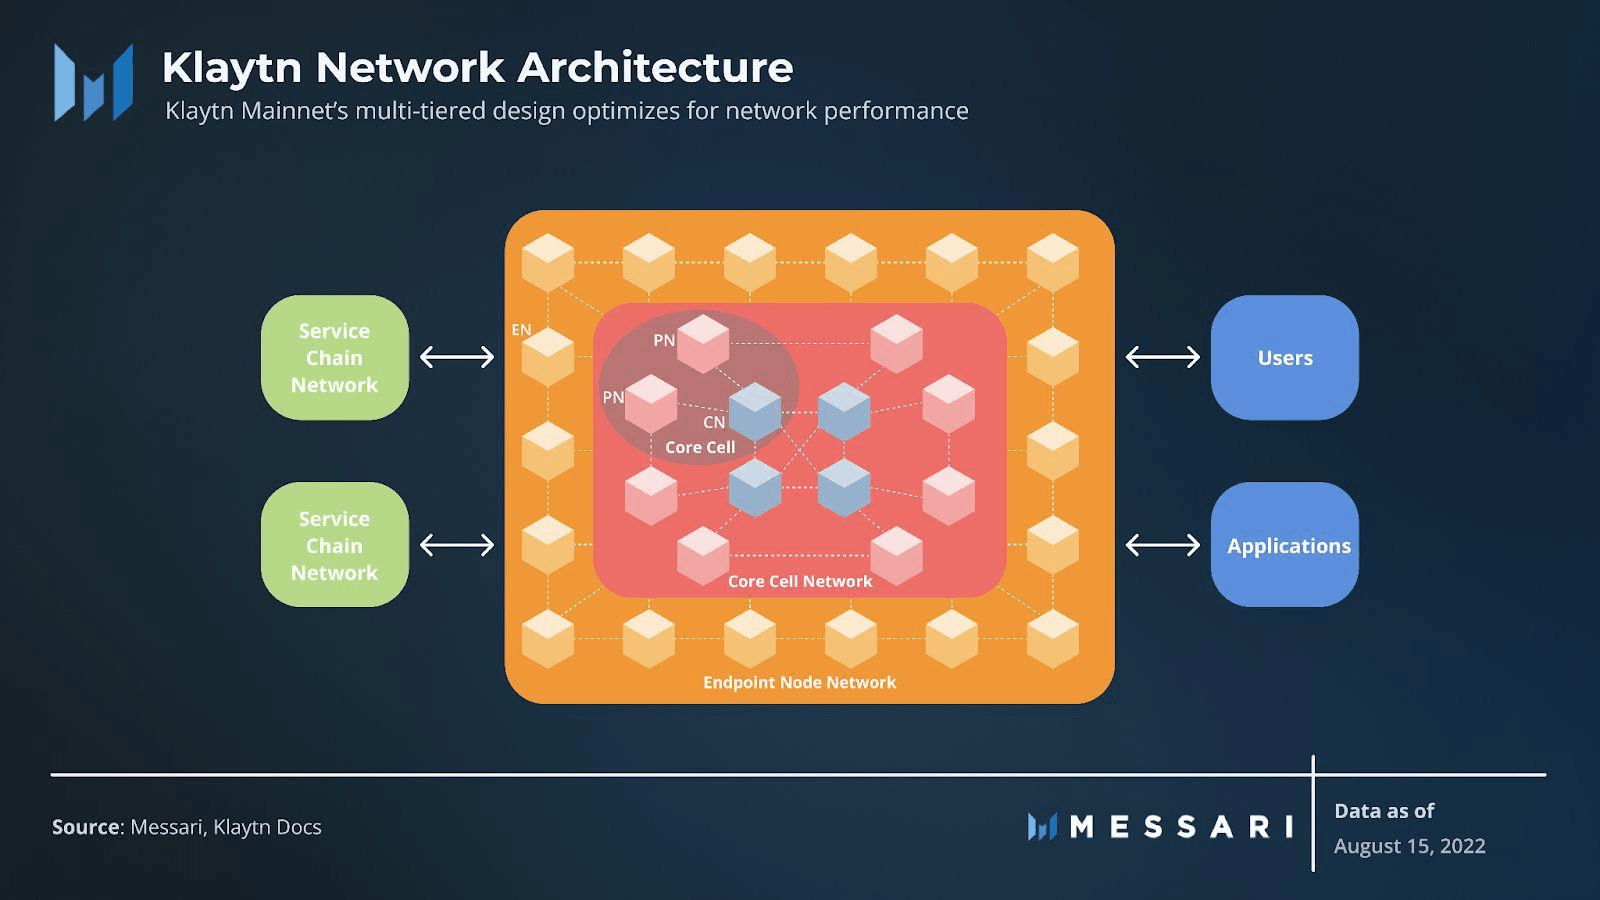 Klaytn Network Architecture